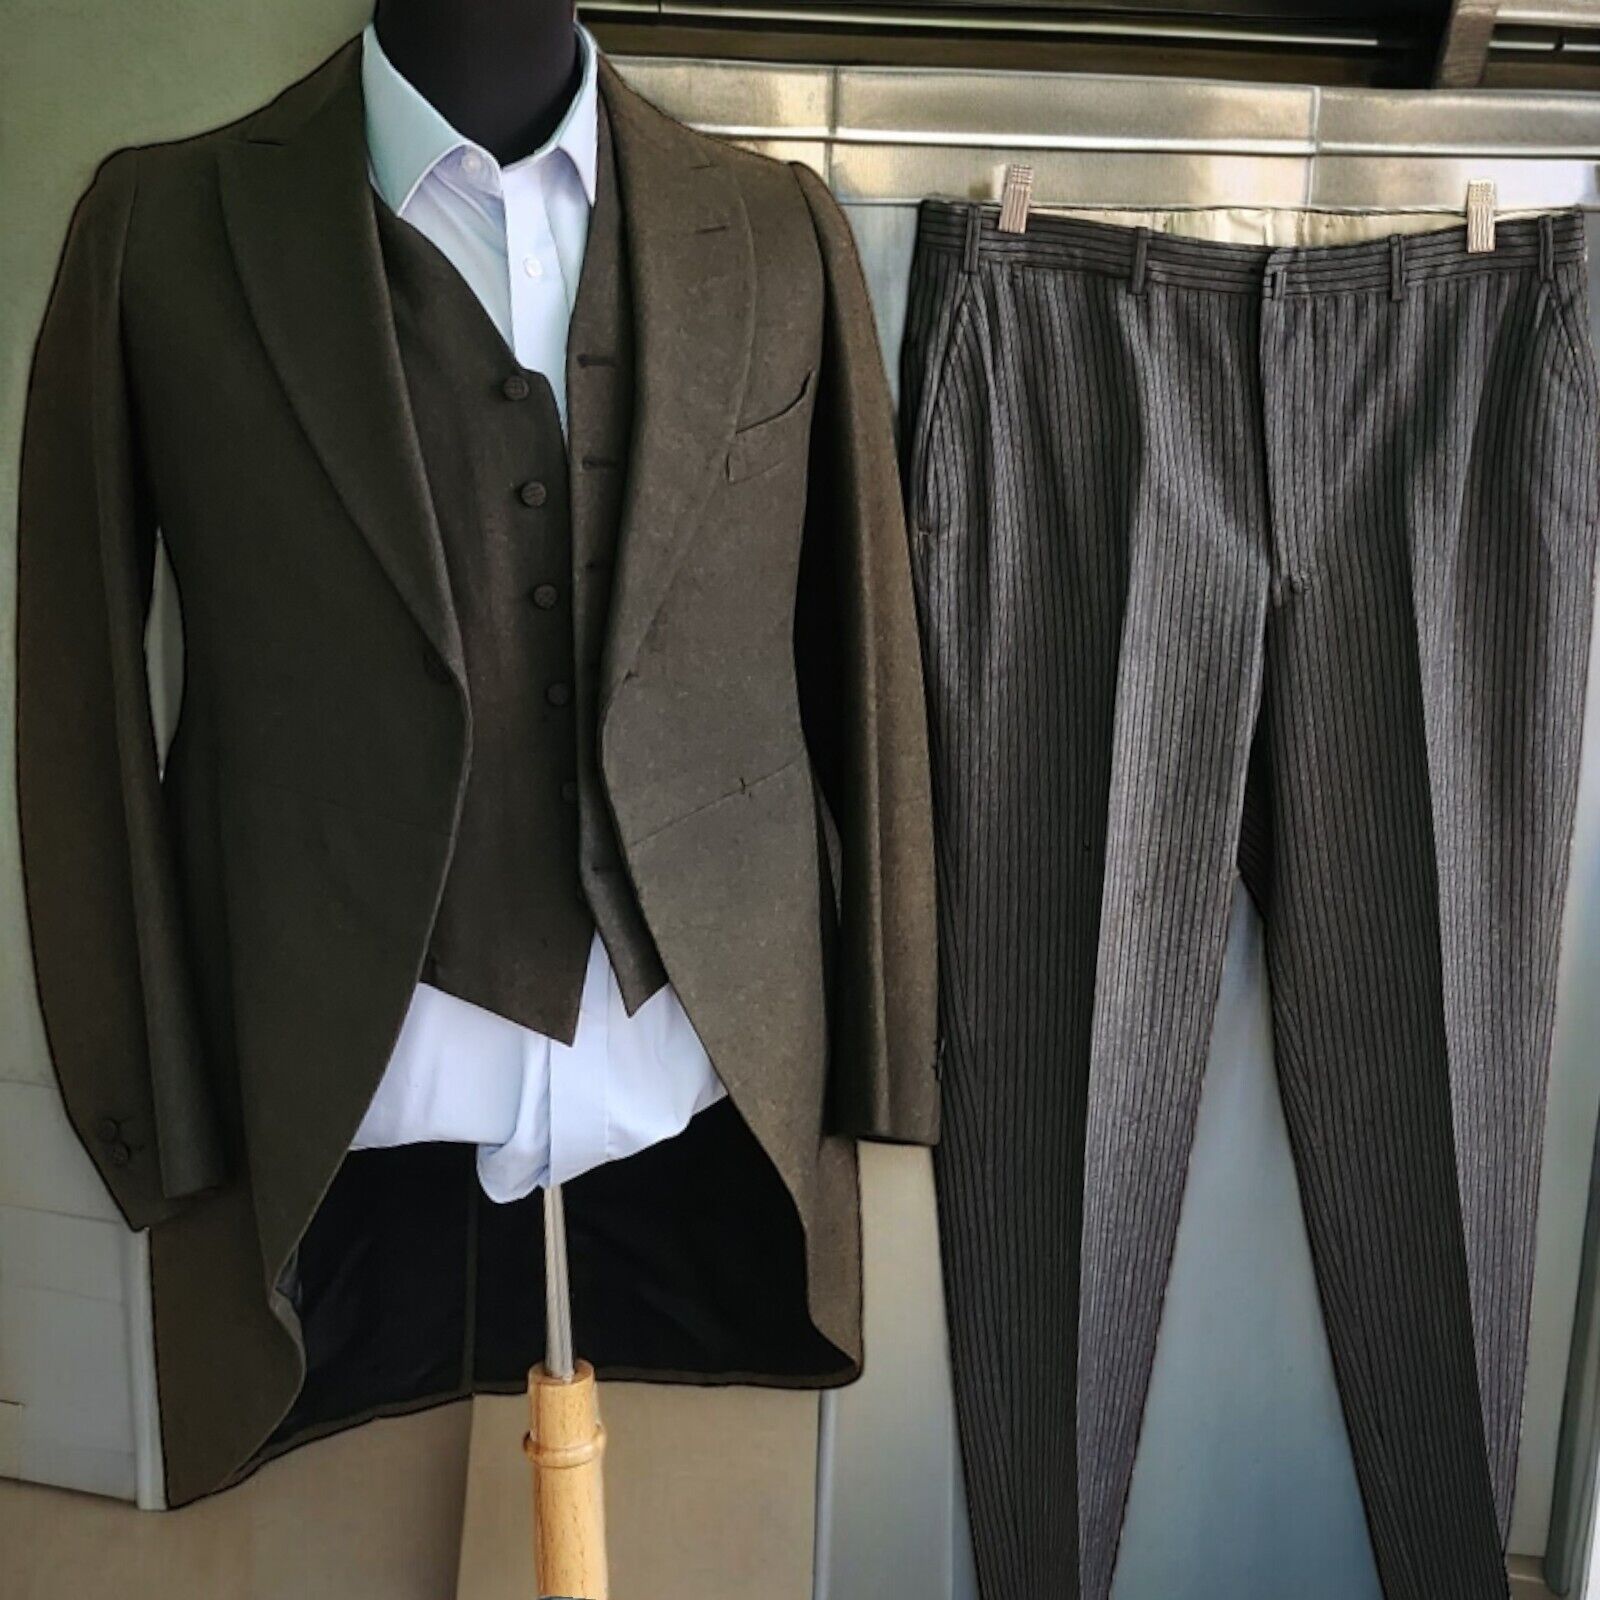 Antique 1920s Suit 3 Piece Tailcoat Tuxedo Green Flannel Peak Lapel Dated Piece